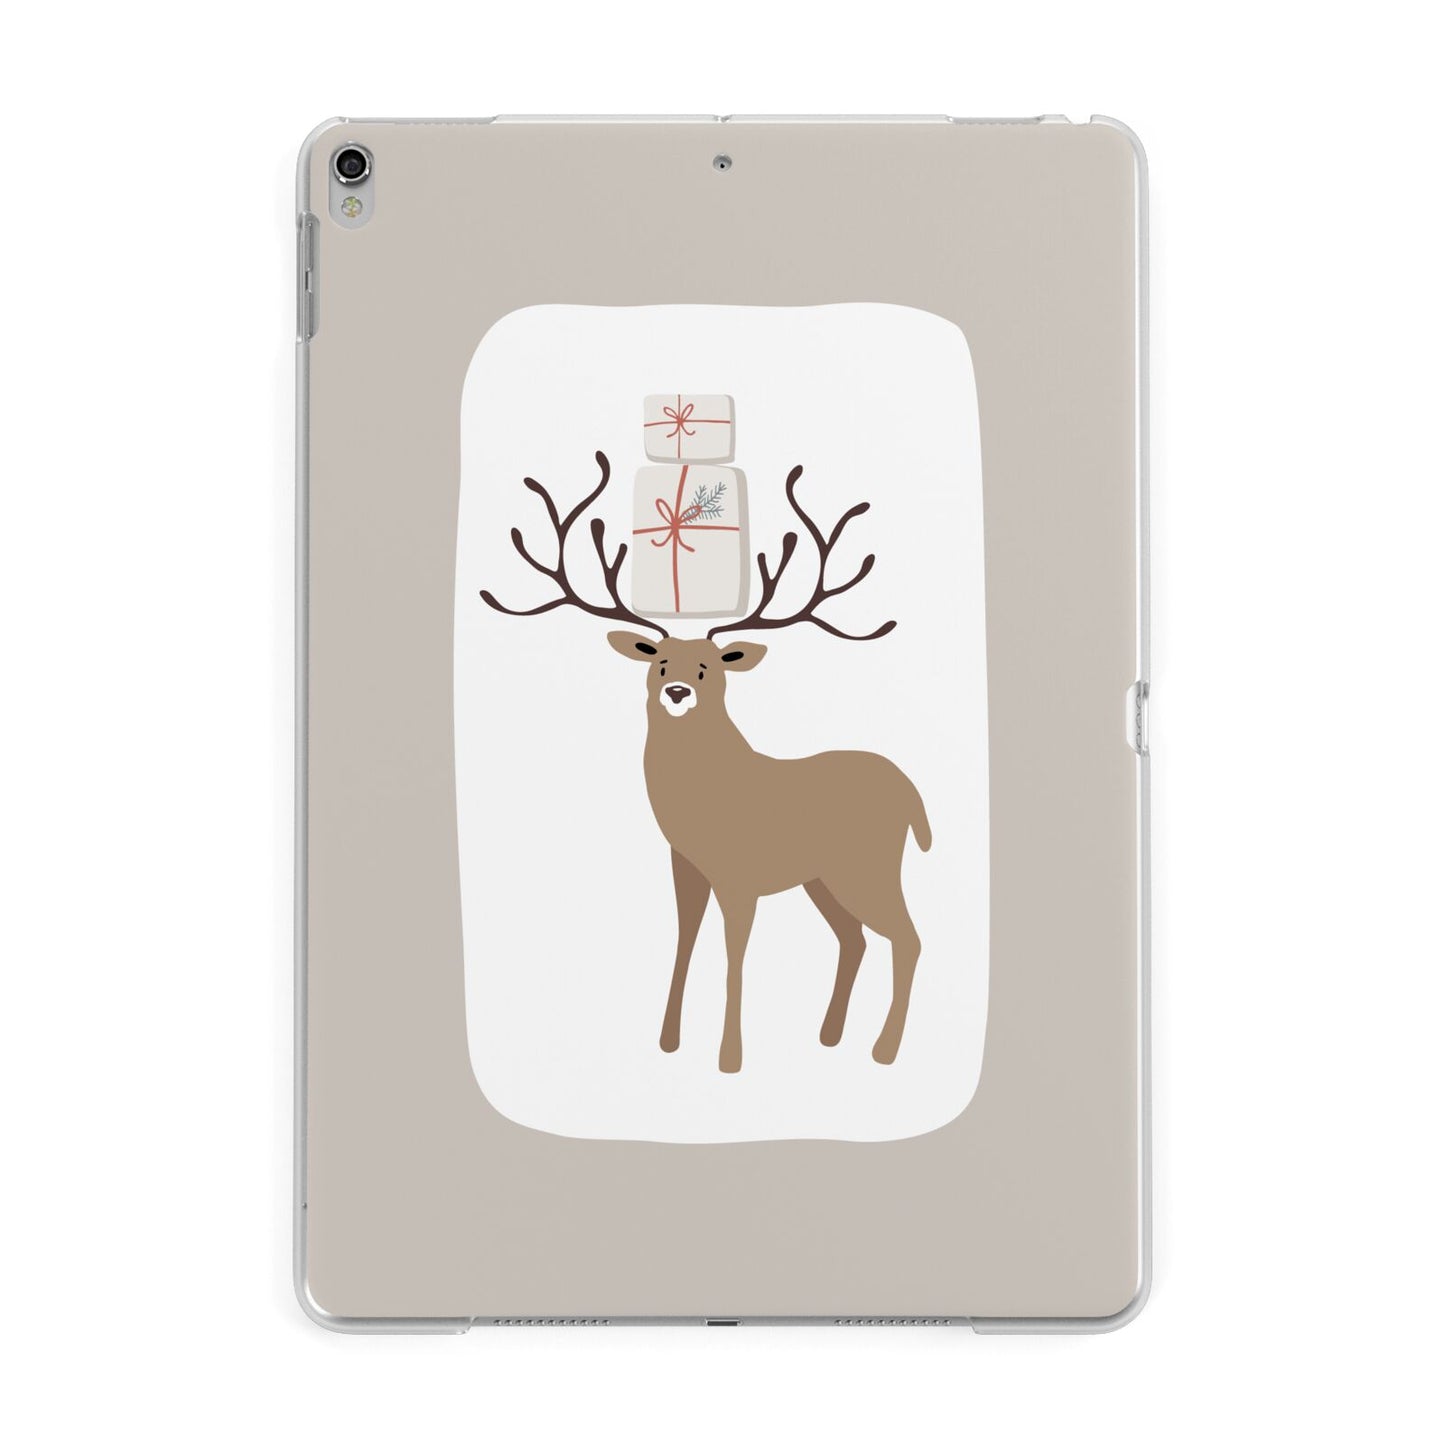 Reindeer Presents Apple iPad Silver Case